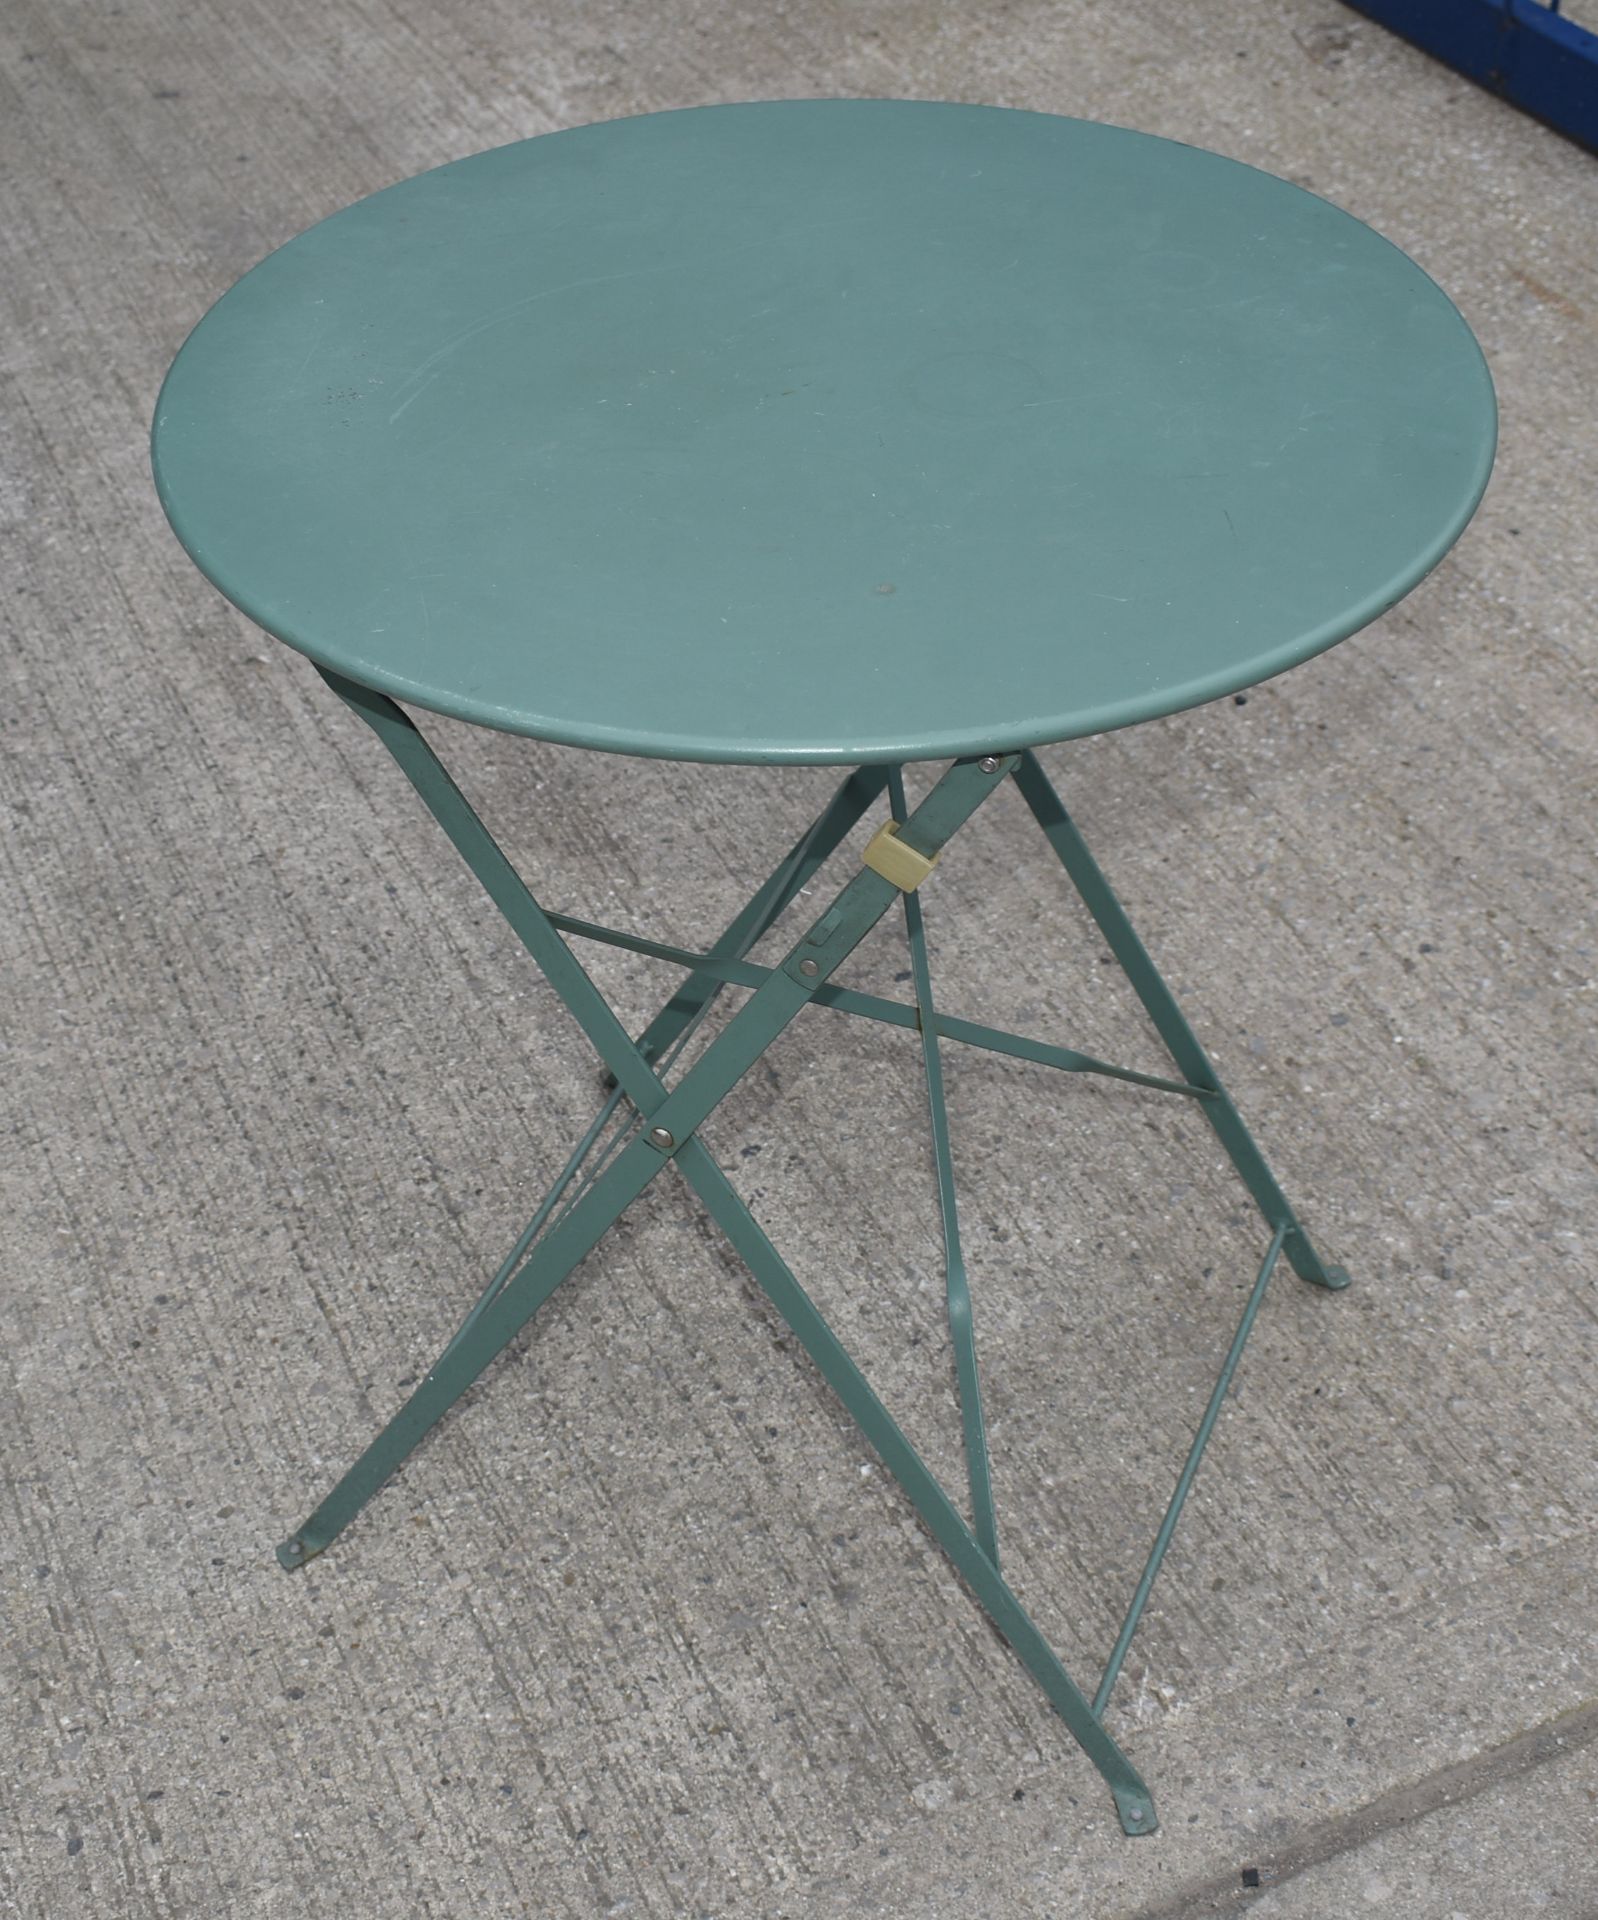 1 x Round Foldaway Green Metal Garden Table - 60 (D) x 71 (H) cms - Ref: K235 - CL905 - Location: Al - Image 7 of 10